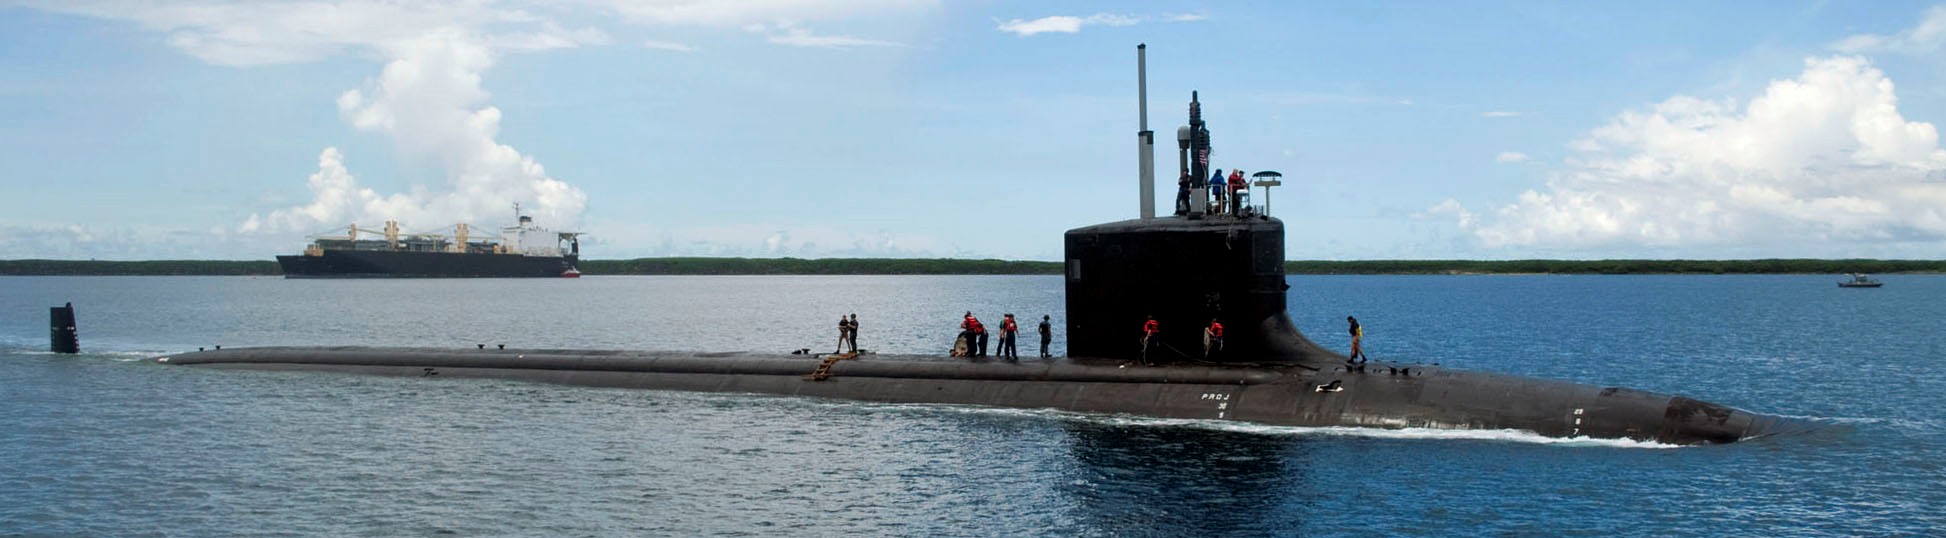 ssn-776 uss hawaii virginia class attack submarine us navy 2010 22 apra harbor guam